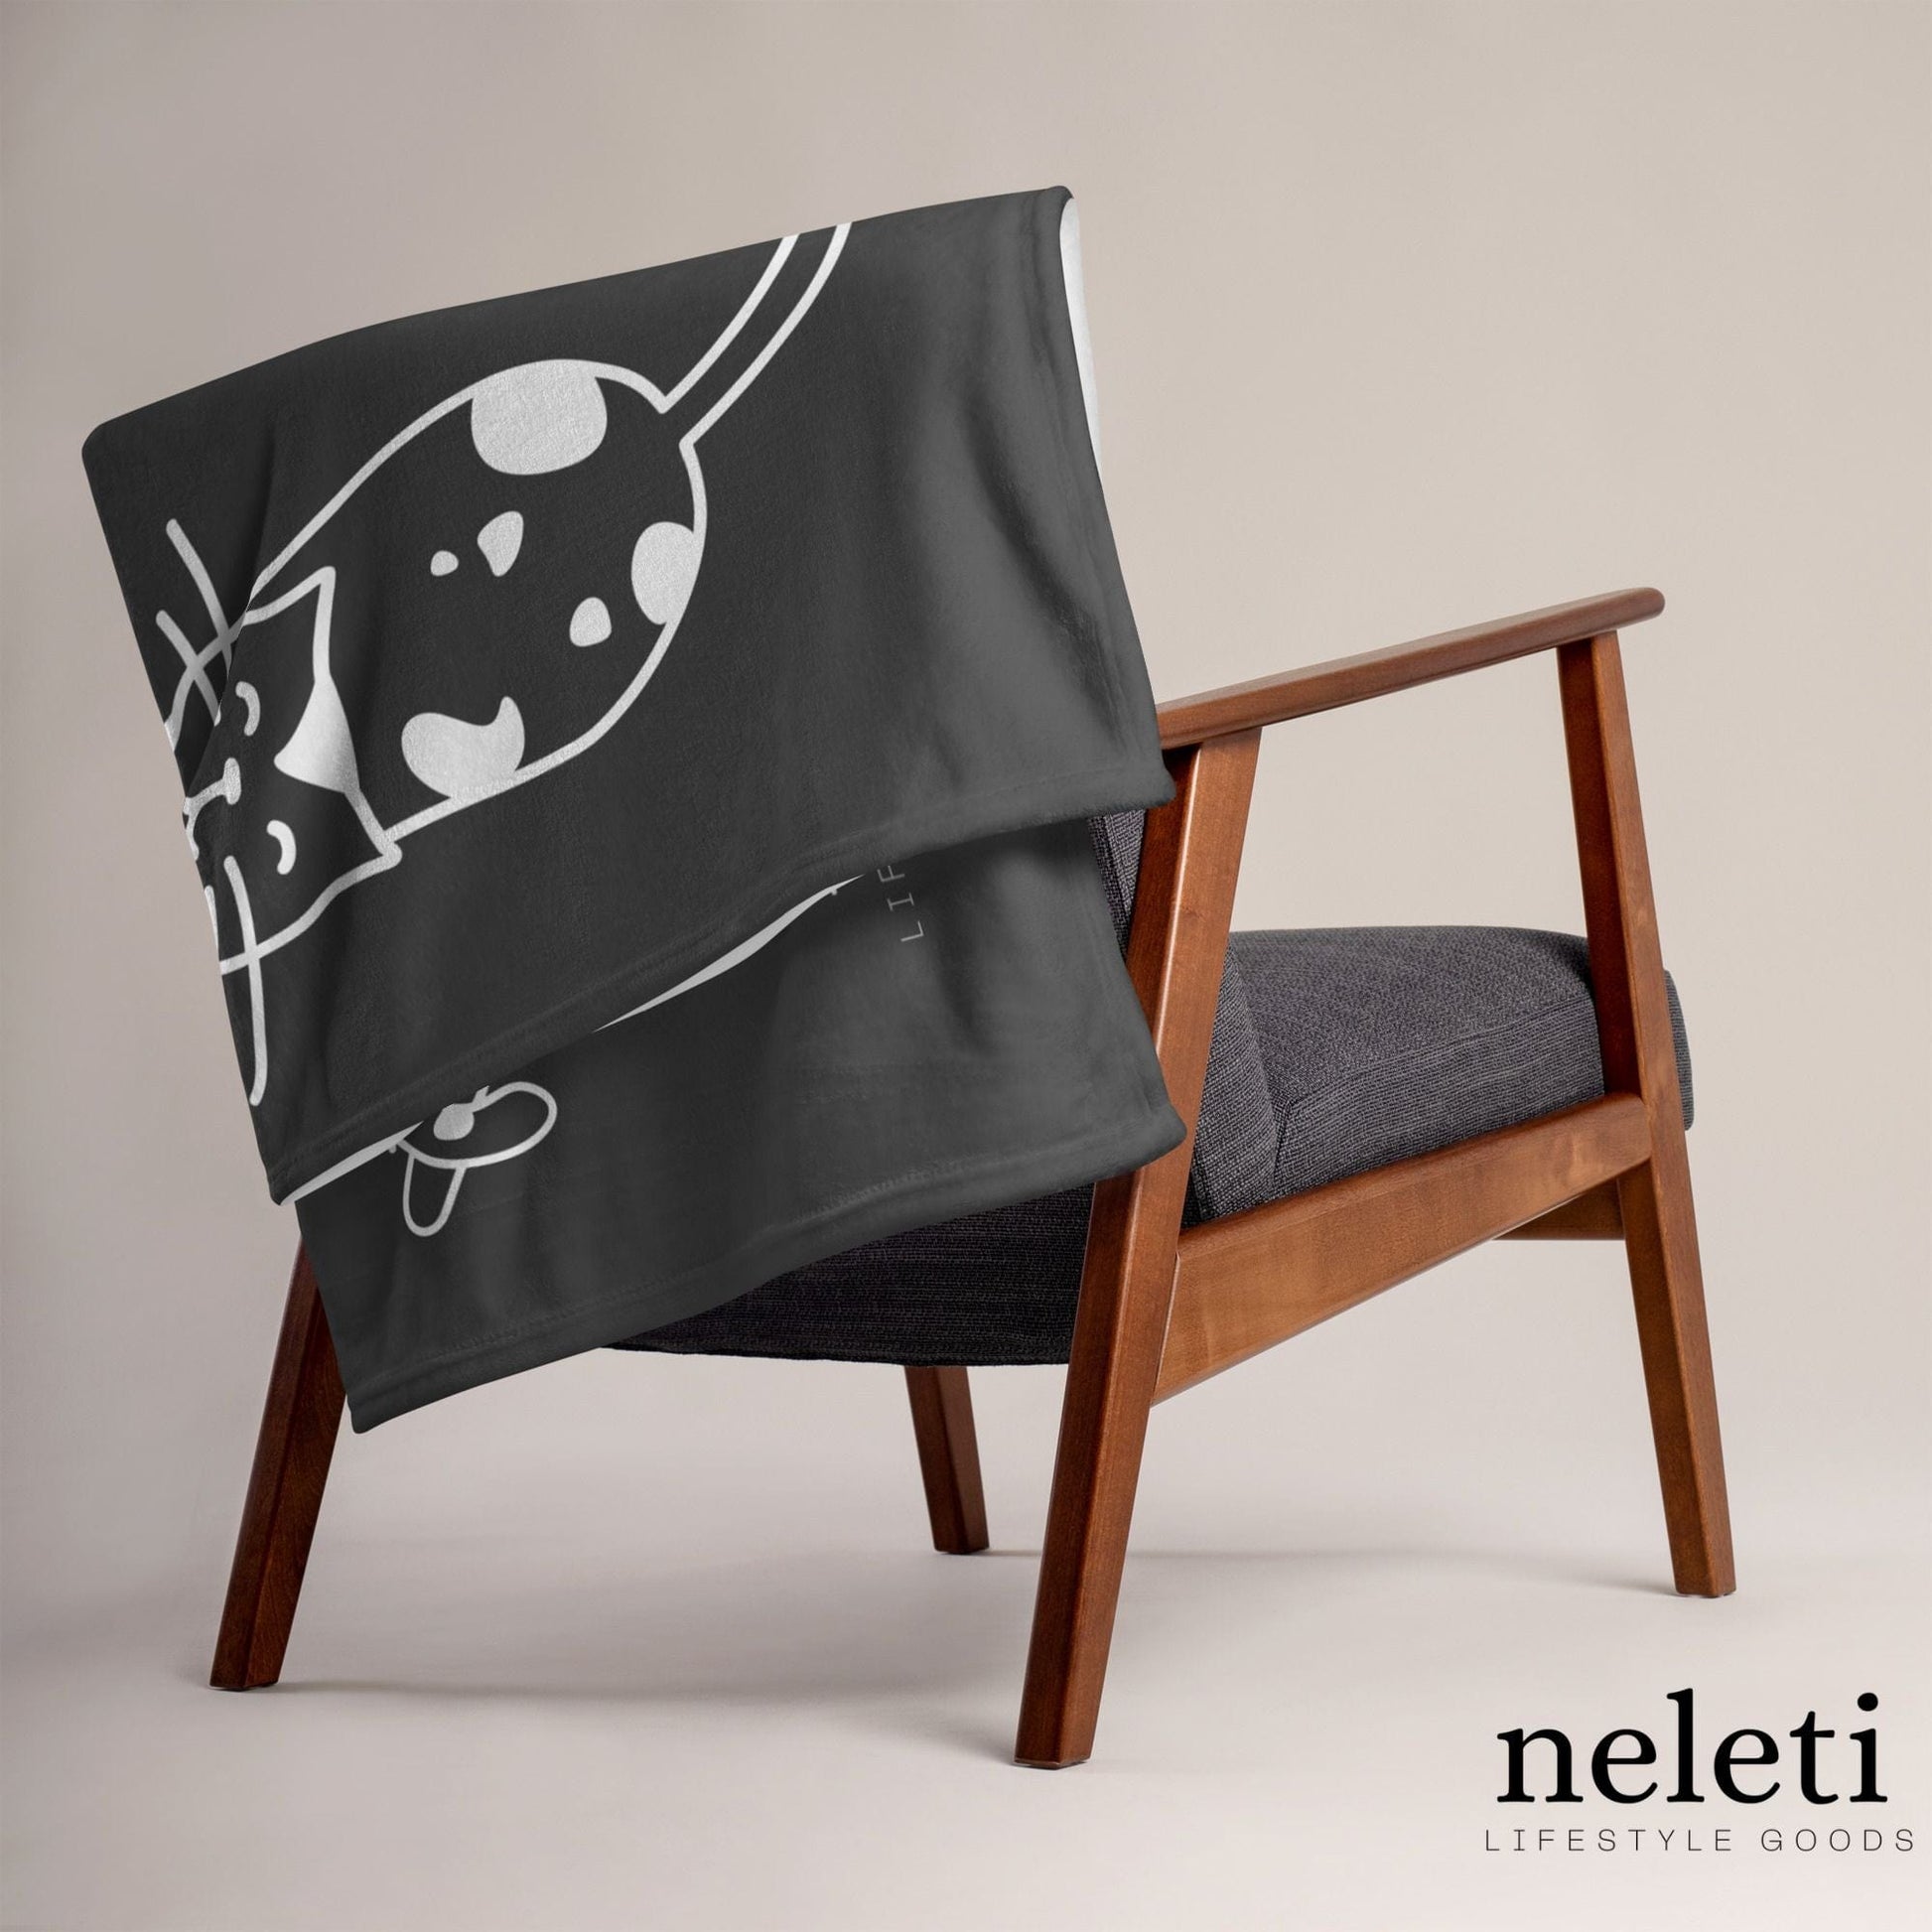    neleti.com-cat-blanket-in-eclipse-color